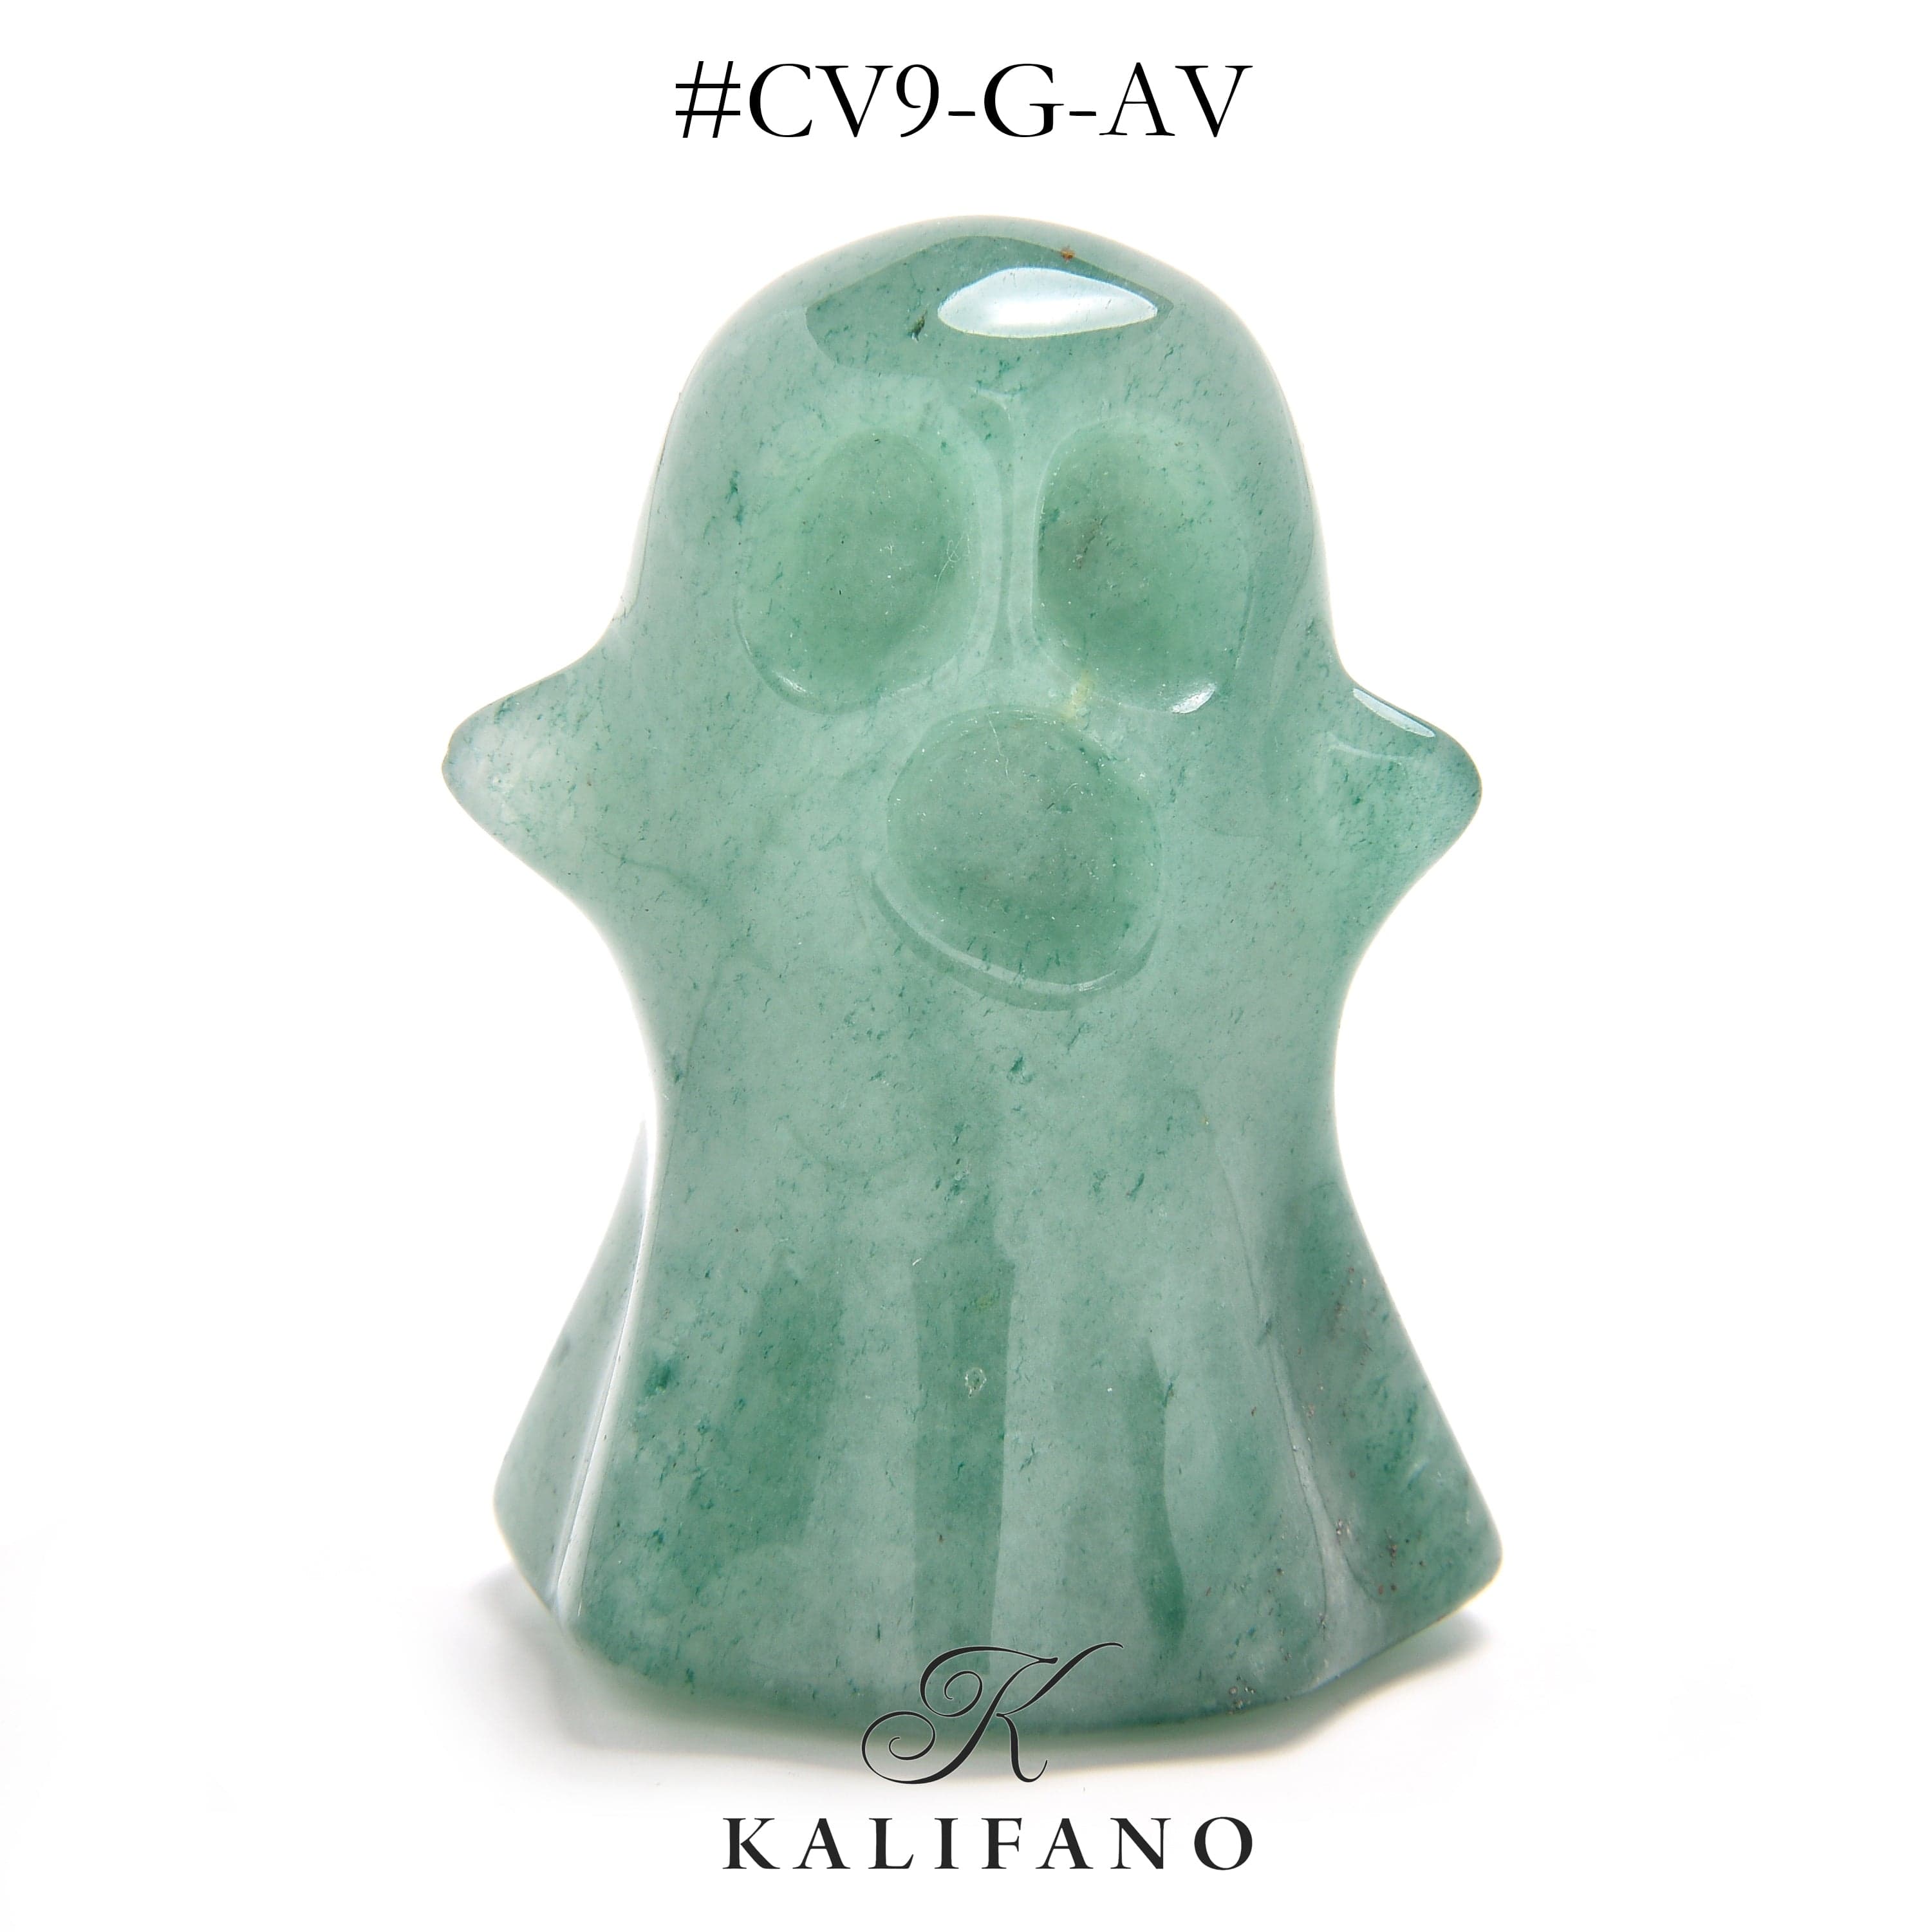 KALIFANO Gemstone Carvings 1.75" Aventurine Ghost Natural Gemstone Carving CV9-G-AV